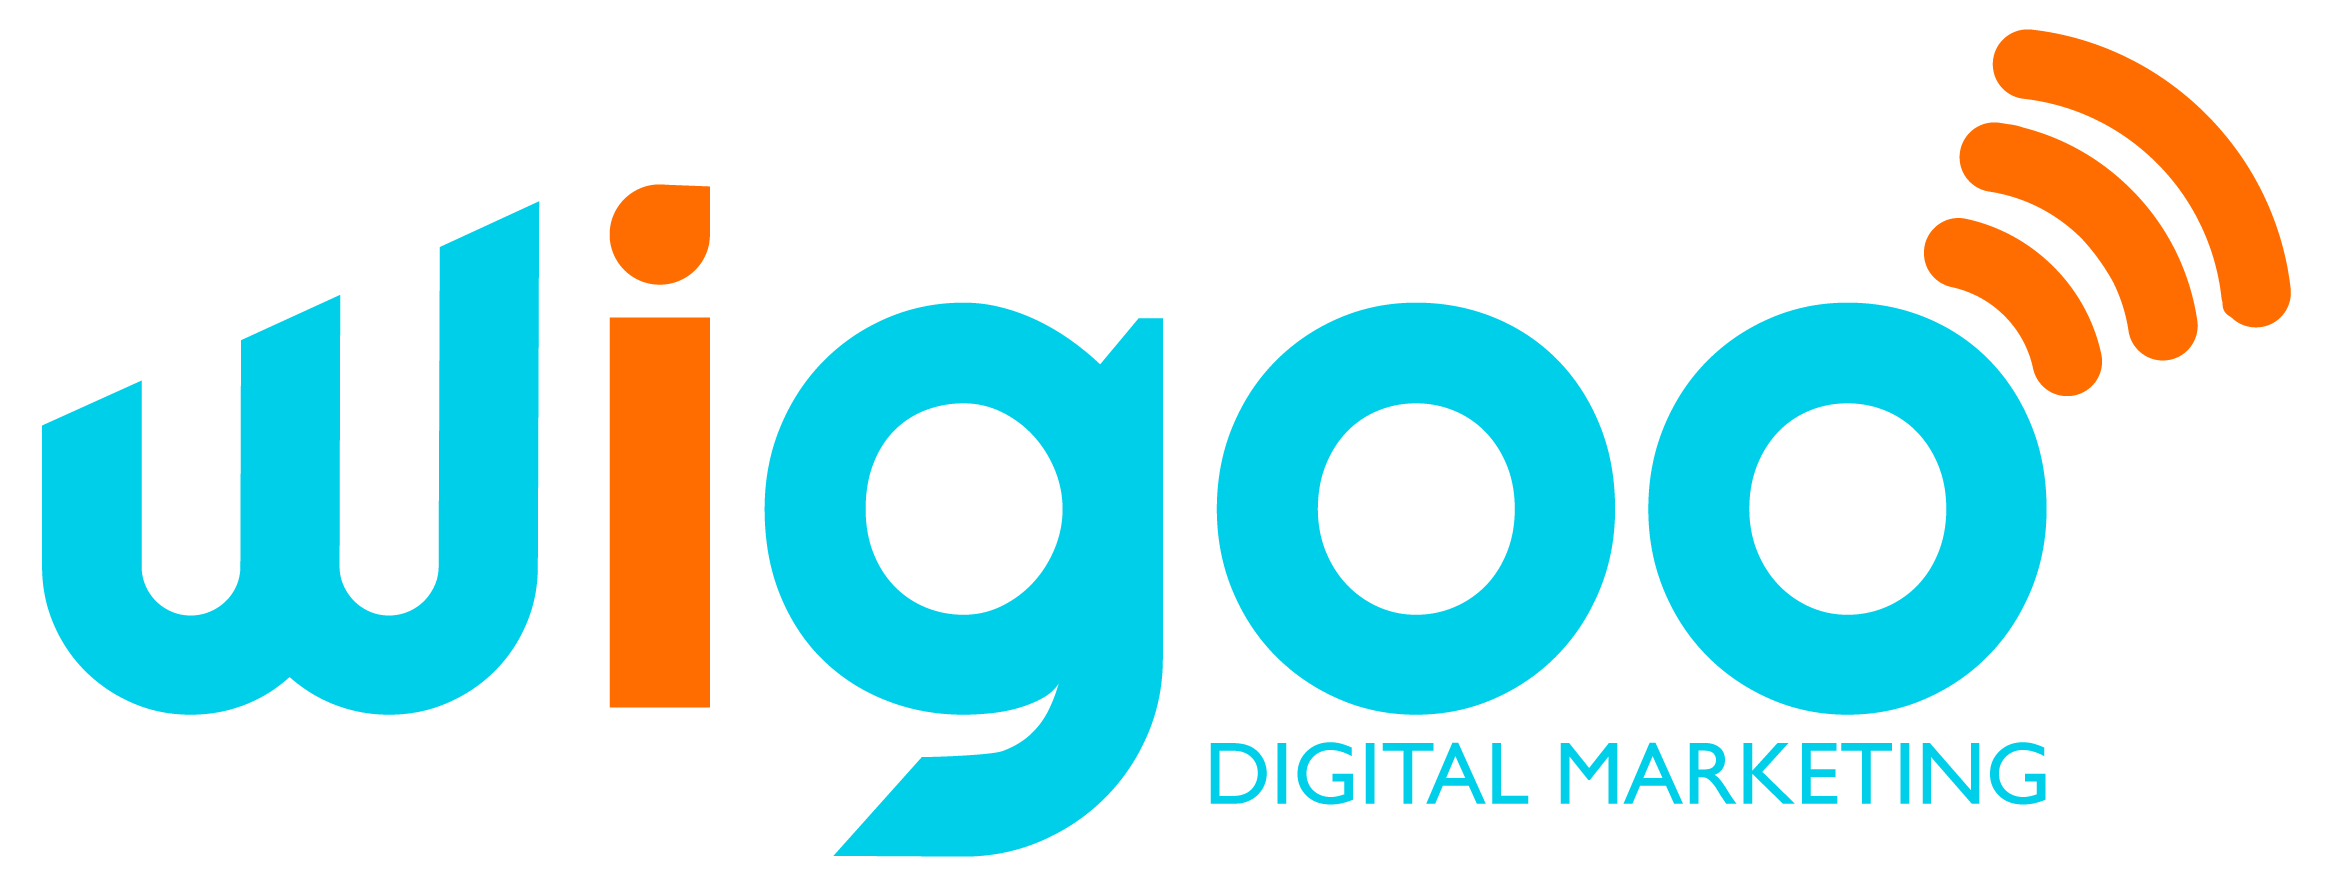 Agência Wigoo Marketing Digital